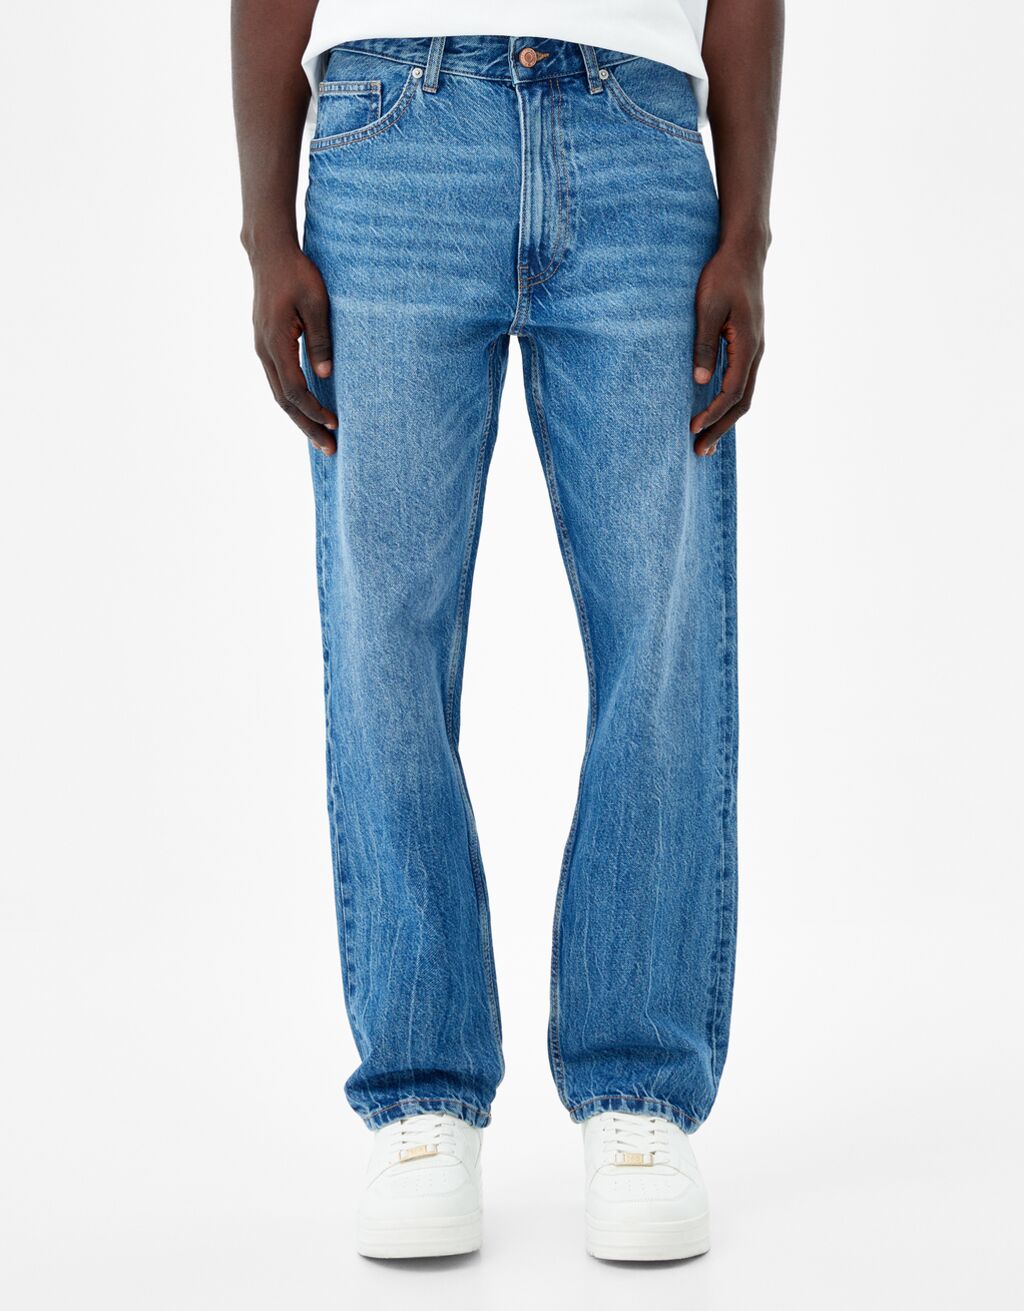 Wide-leg ’90s jeans